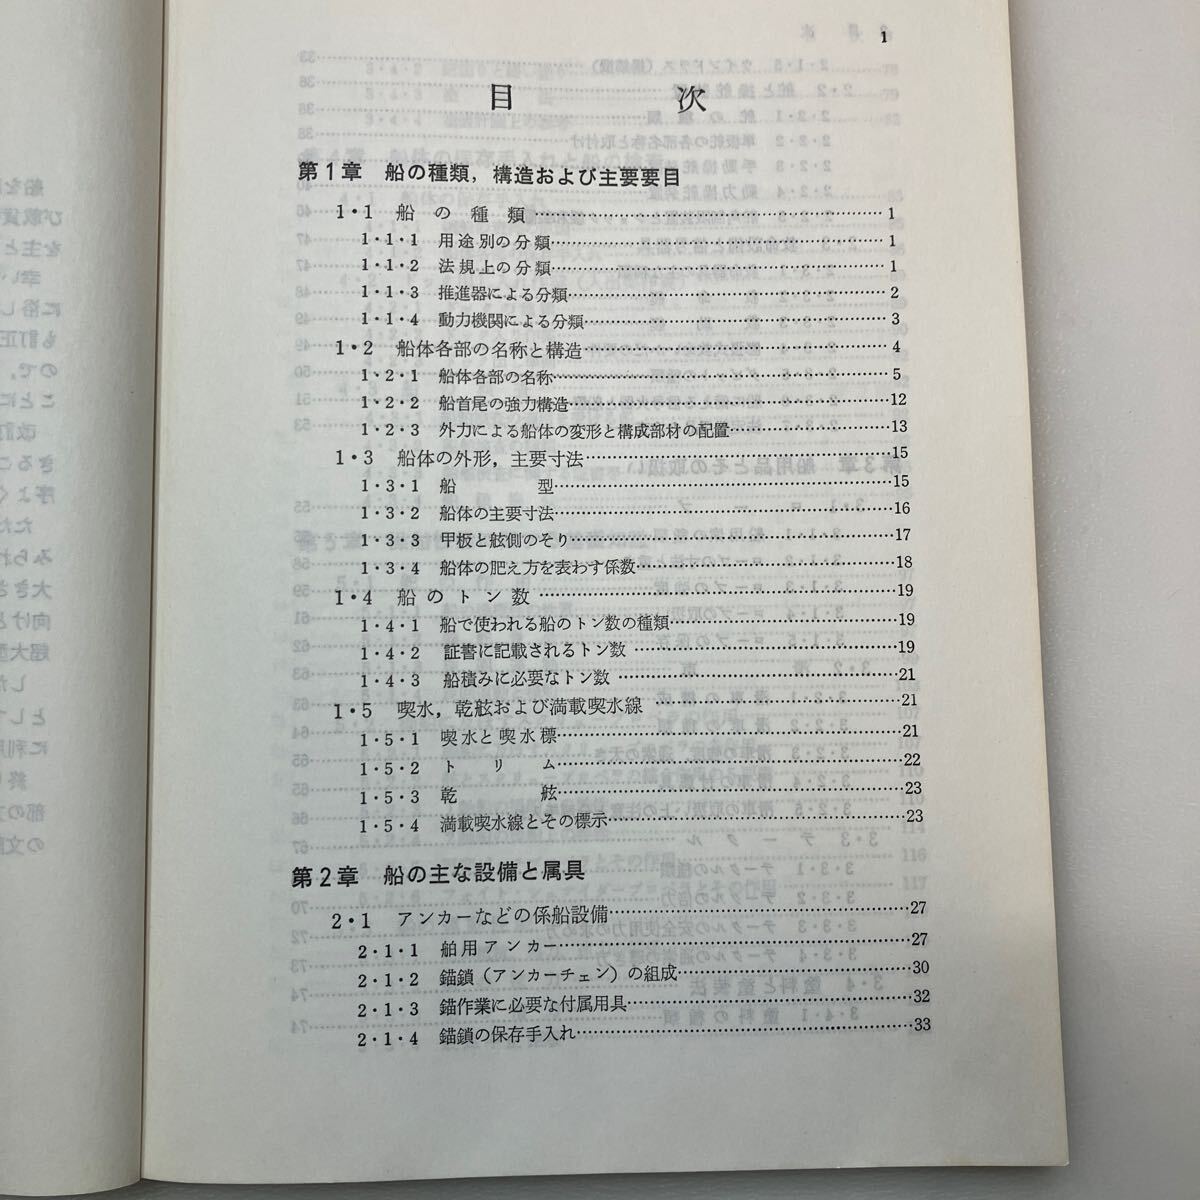 zaa557♪基本運用術 単行本 本田 啓之輔 (著) 海文堂出版 (1990/4/5)_画像2